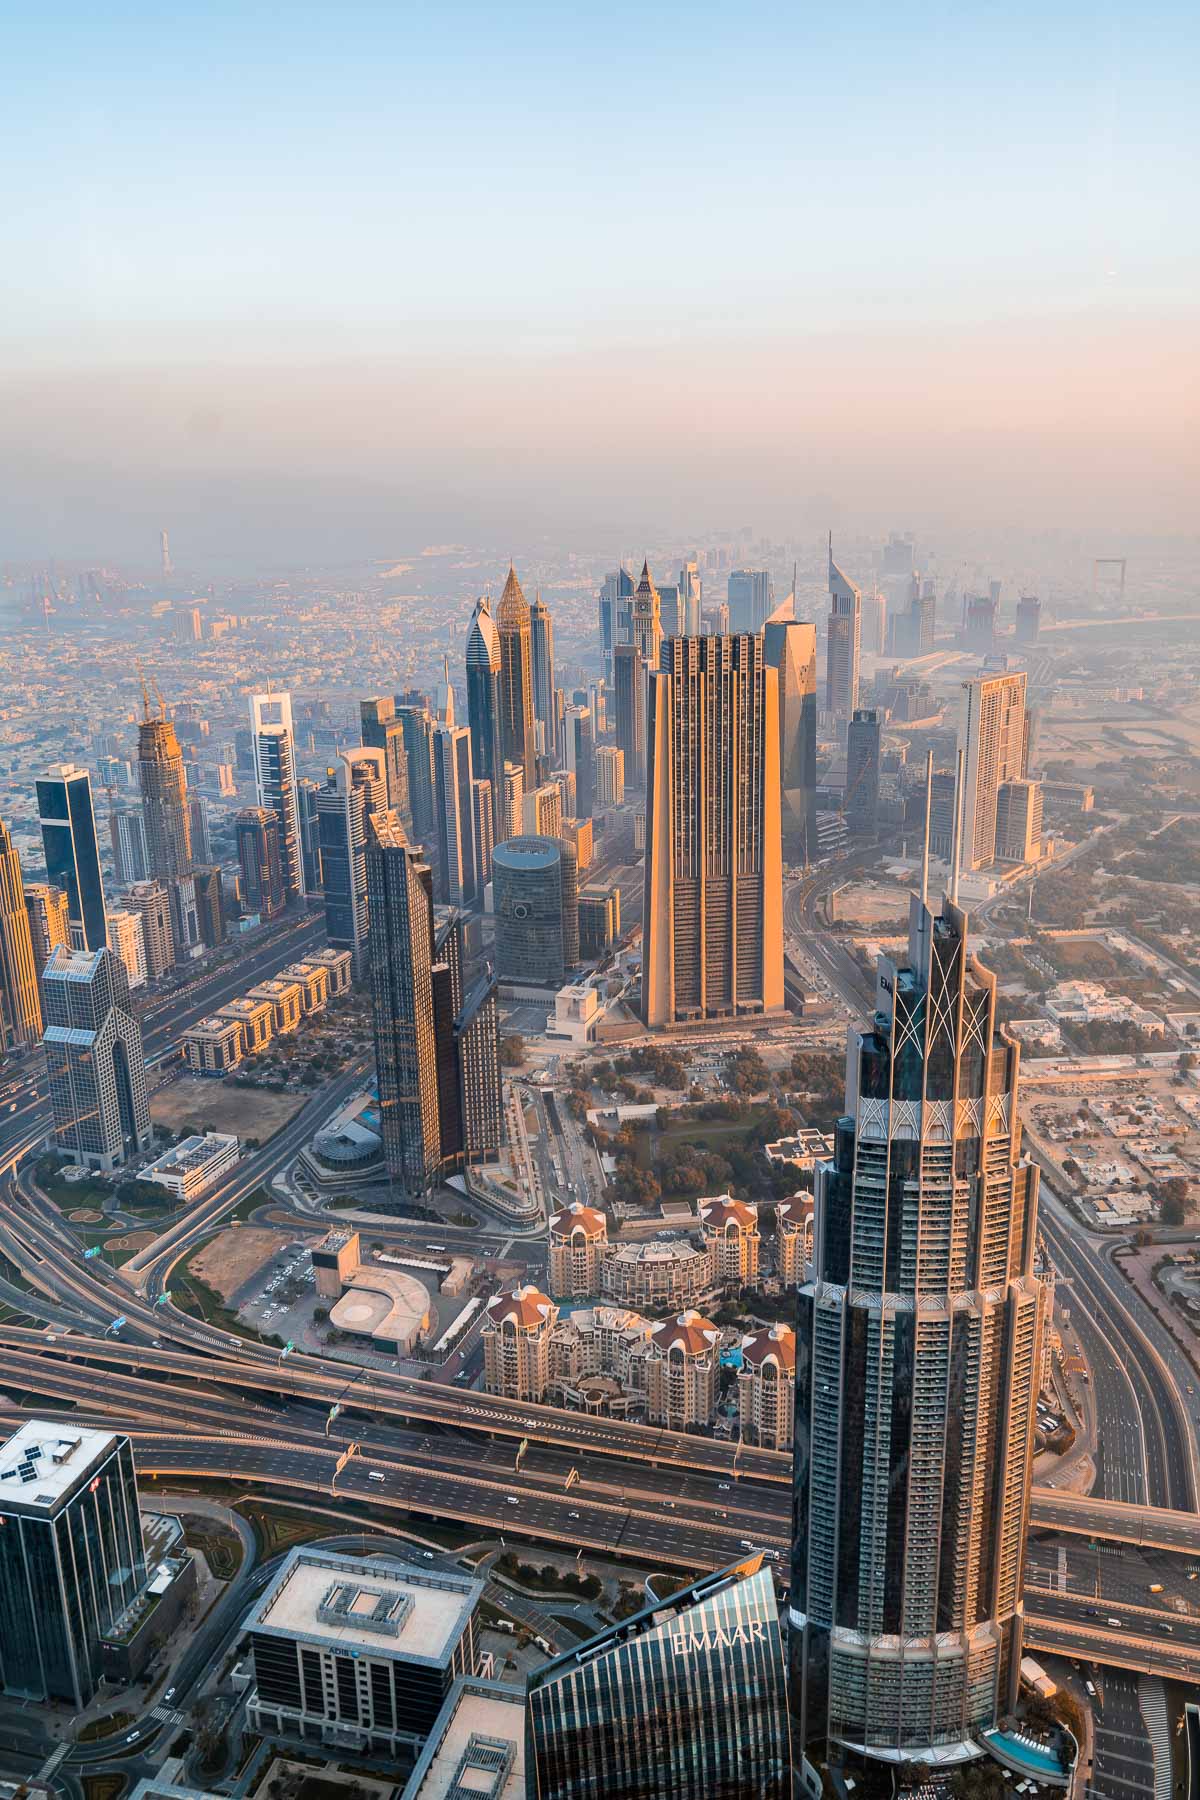 View of the Dubai skyline from the Burj Khalifa at sunrise